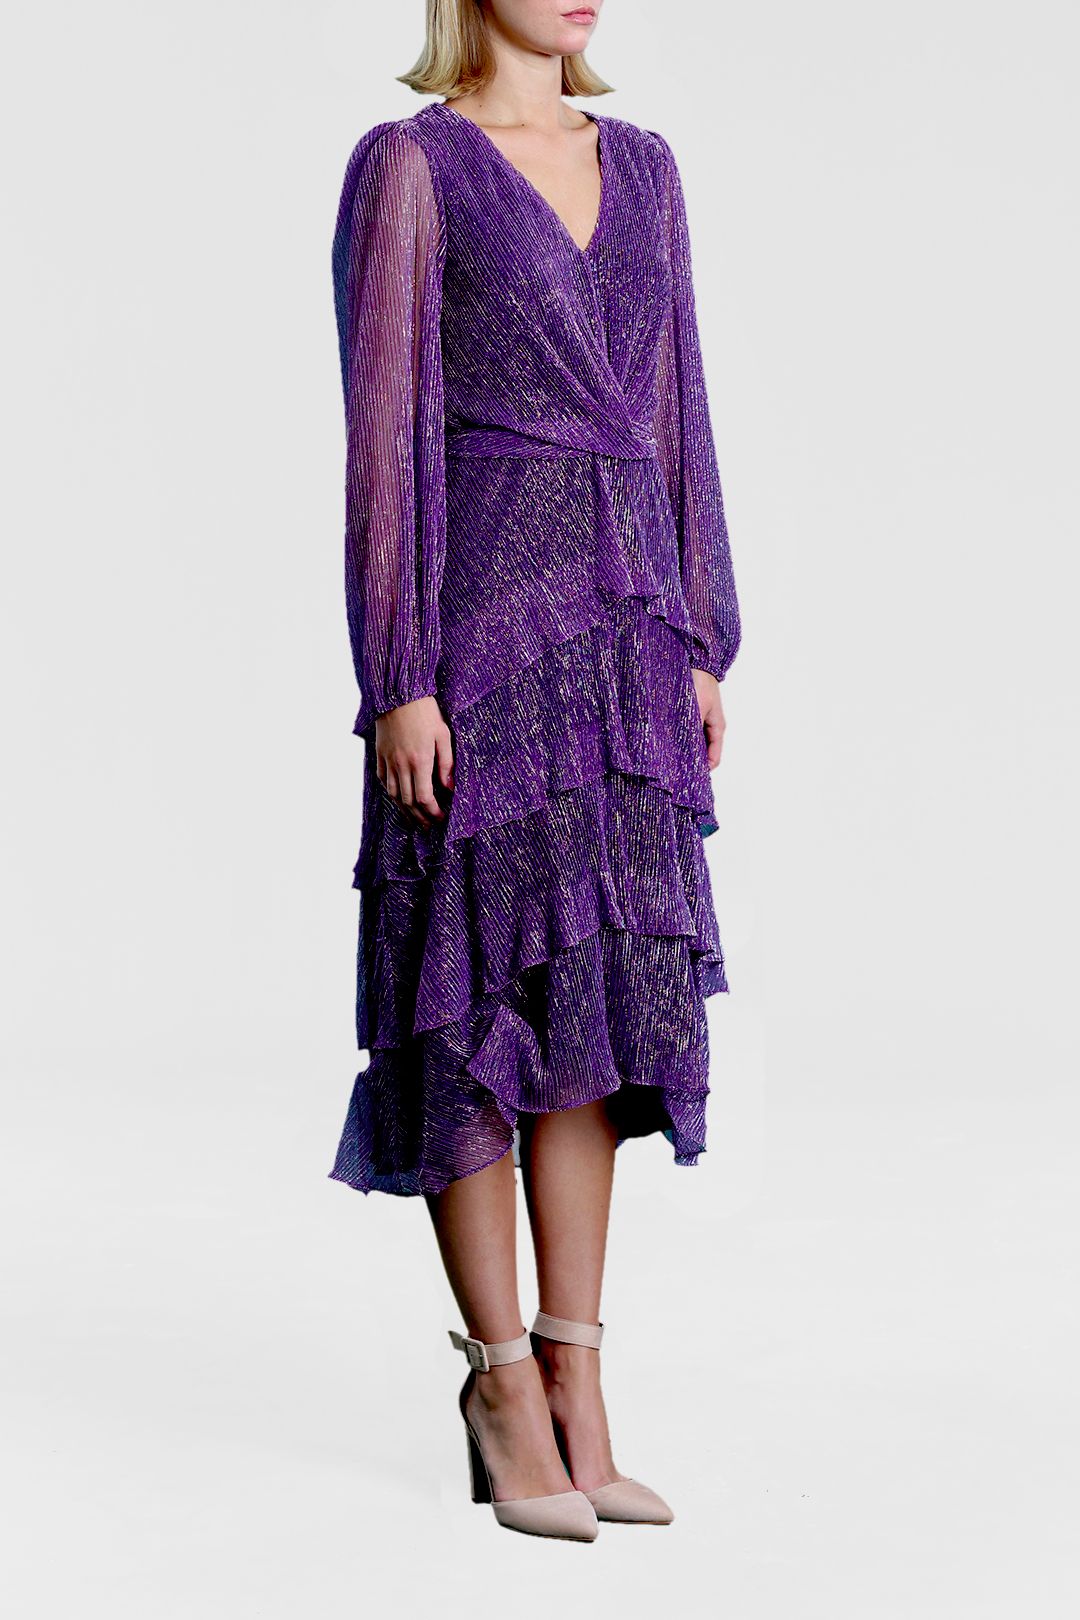 Portmans Long Sleeve Striped Purple Dress